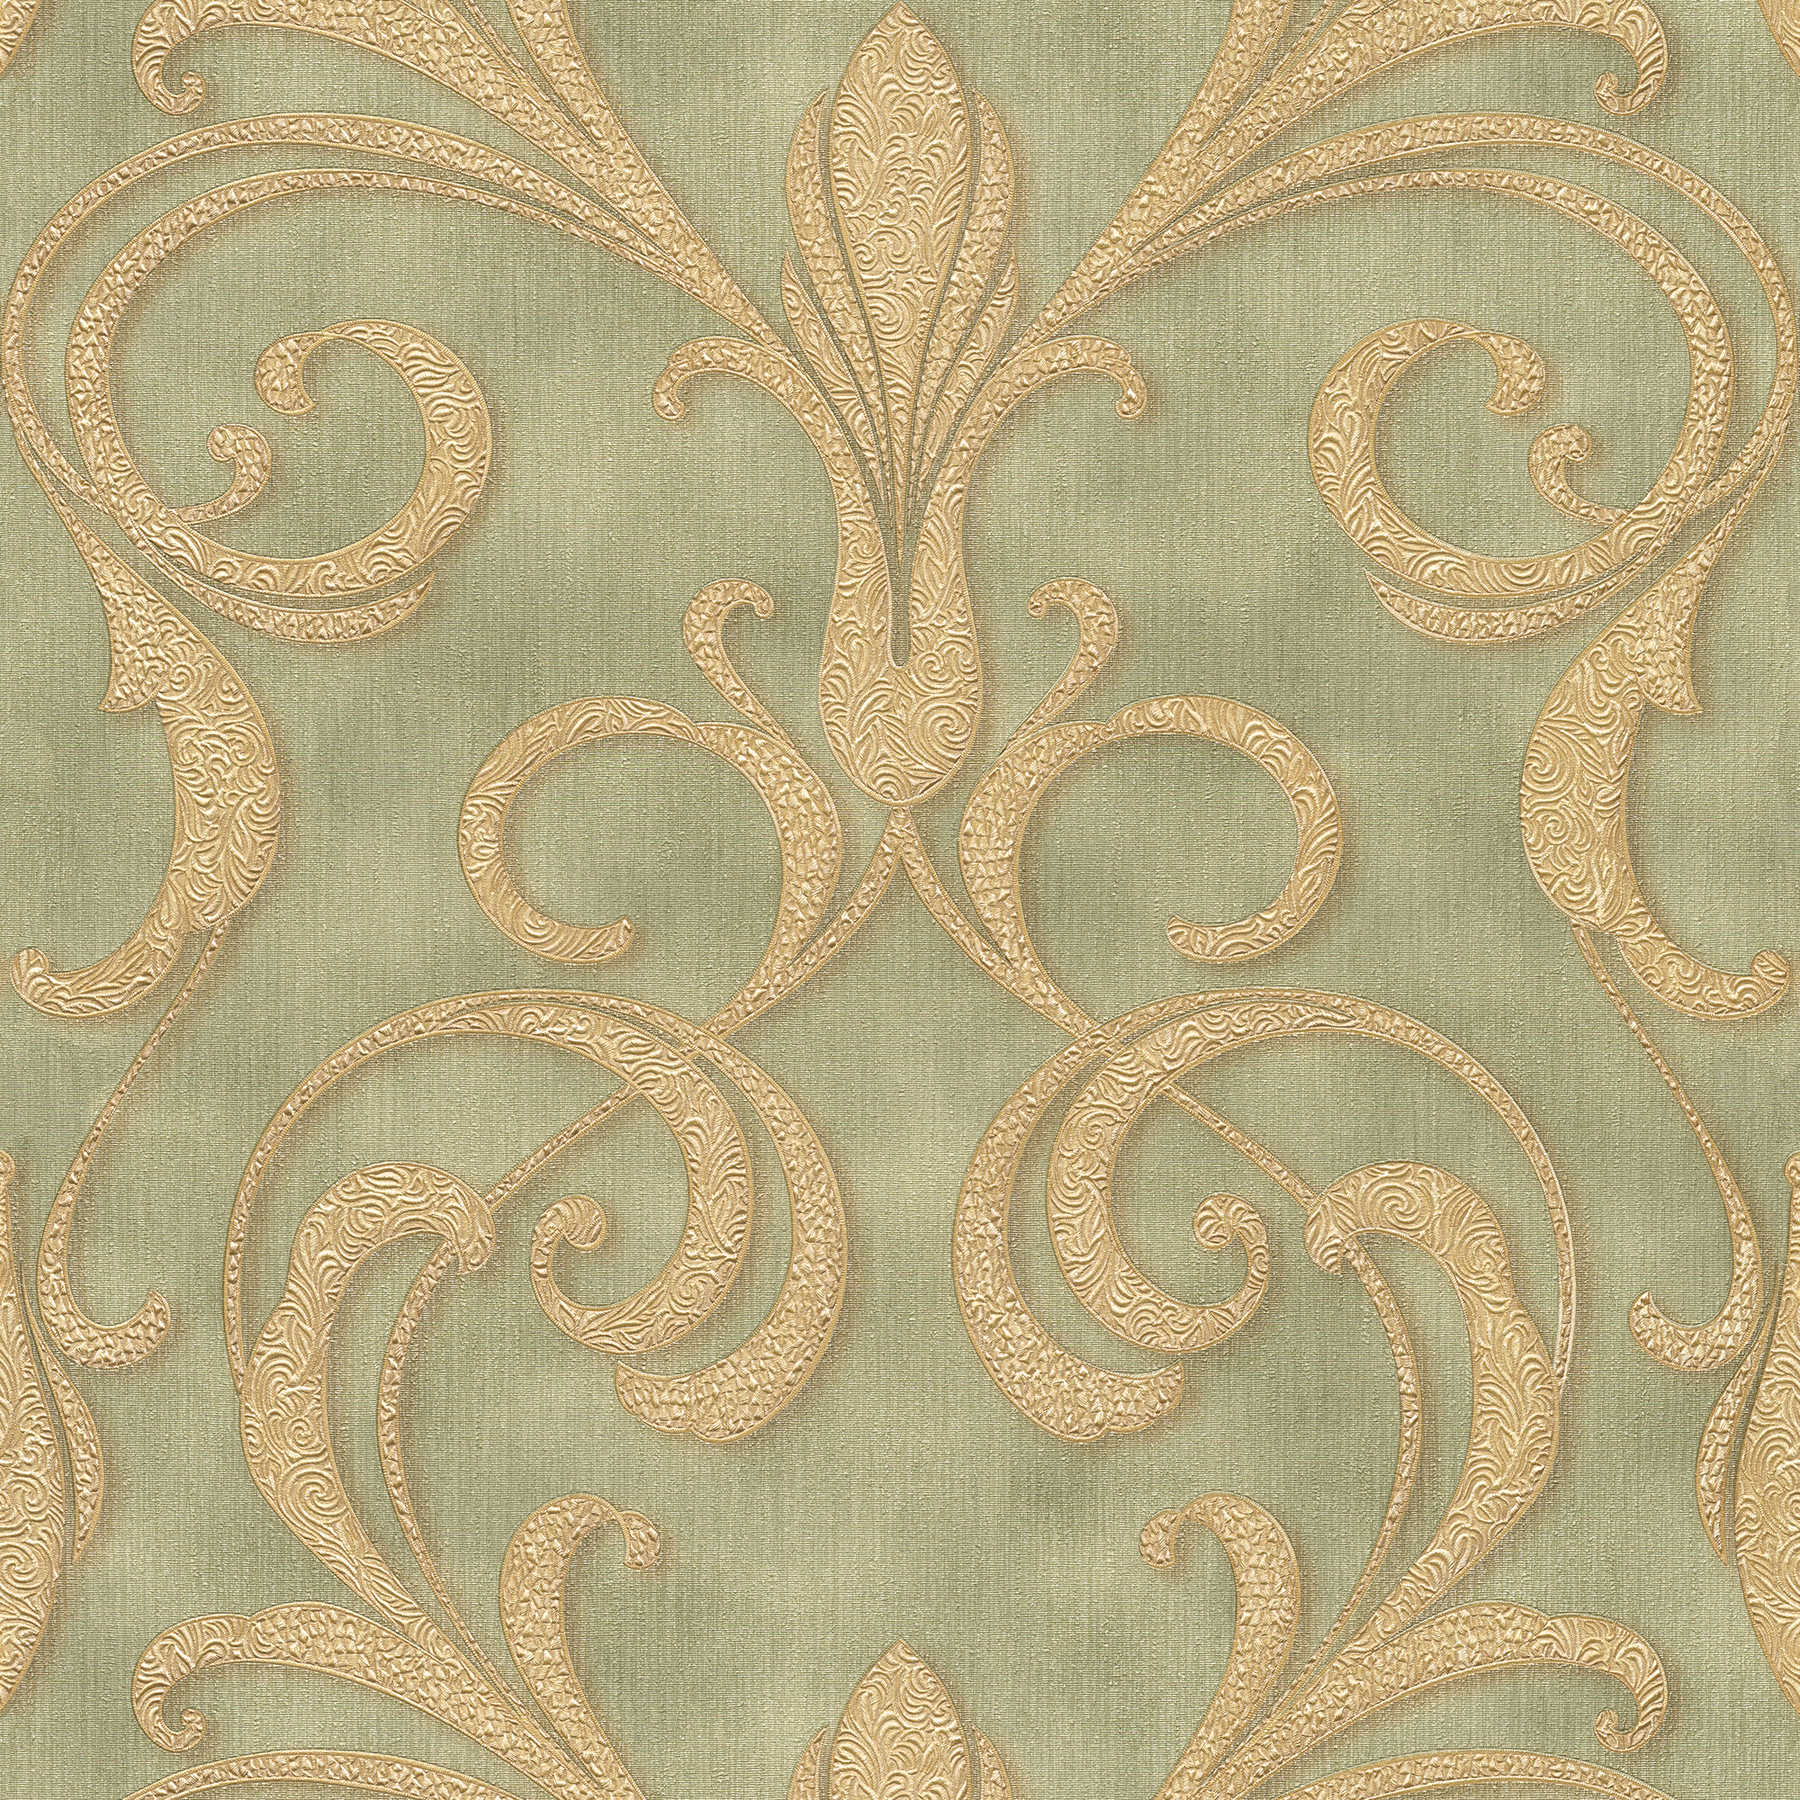 Ornament wallpaper filigree design - green, metallic
